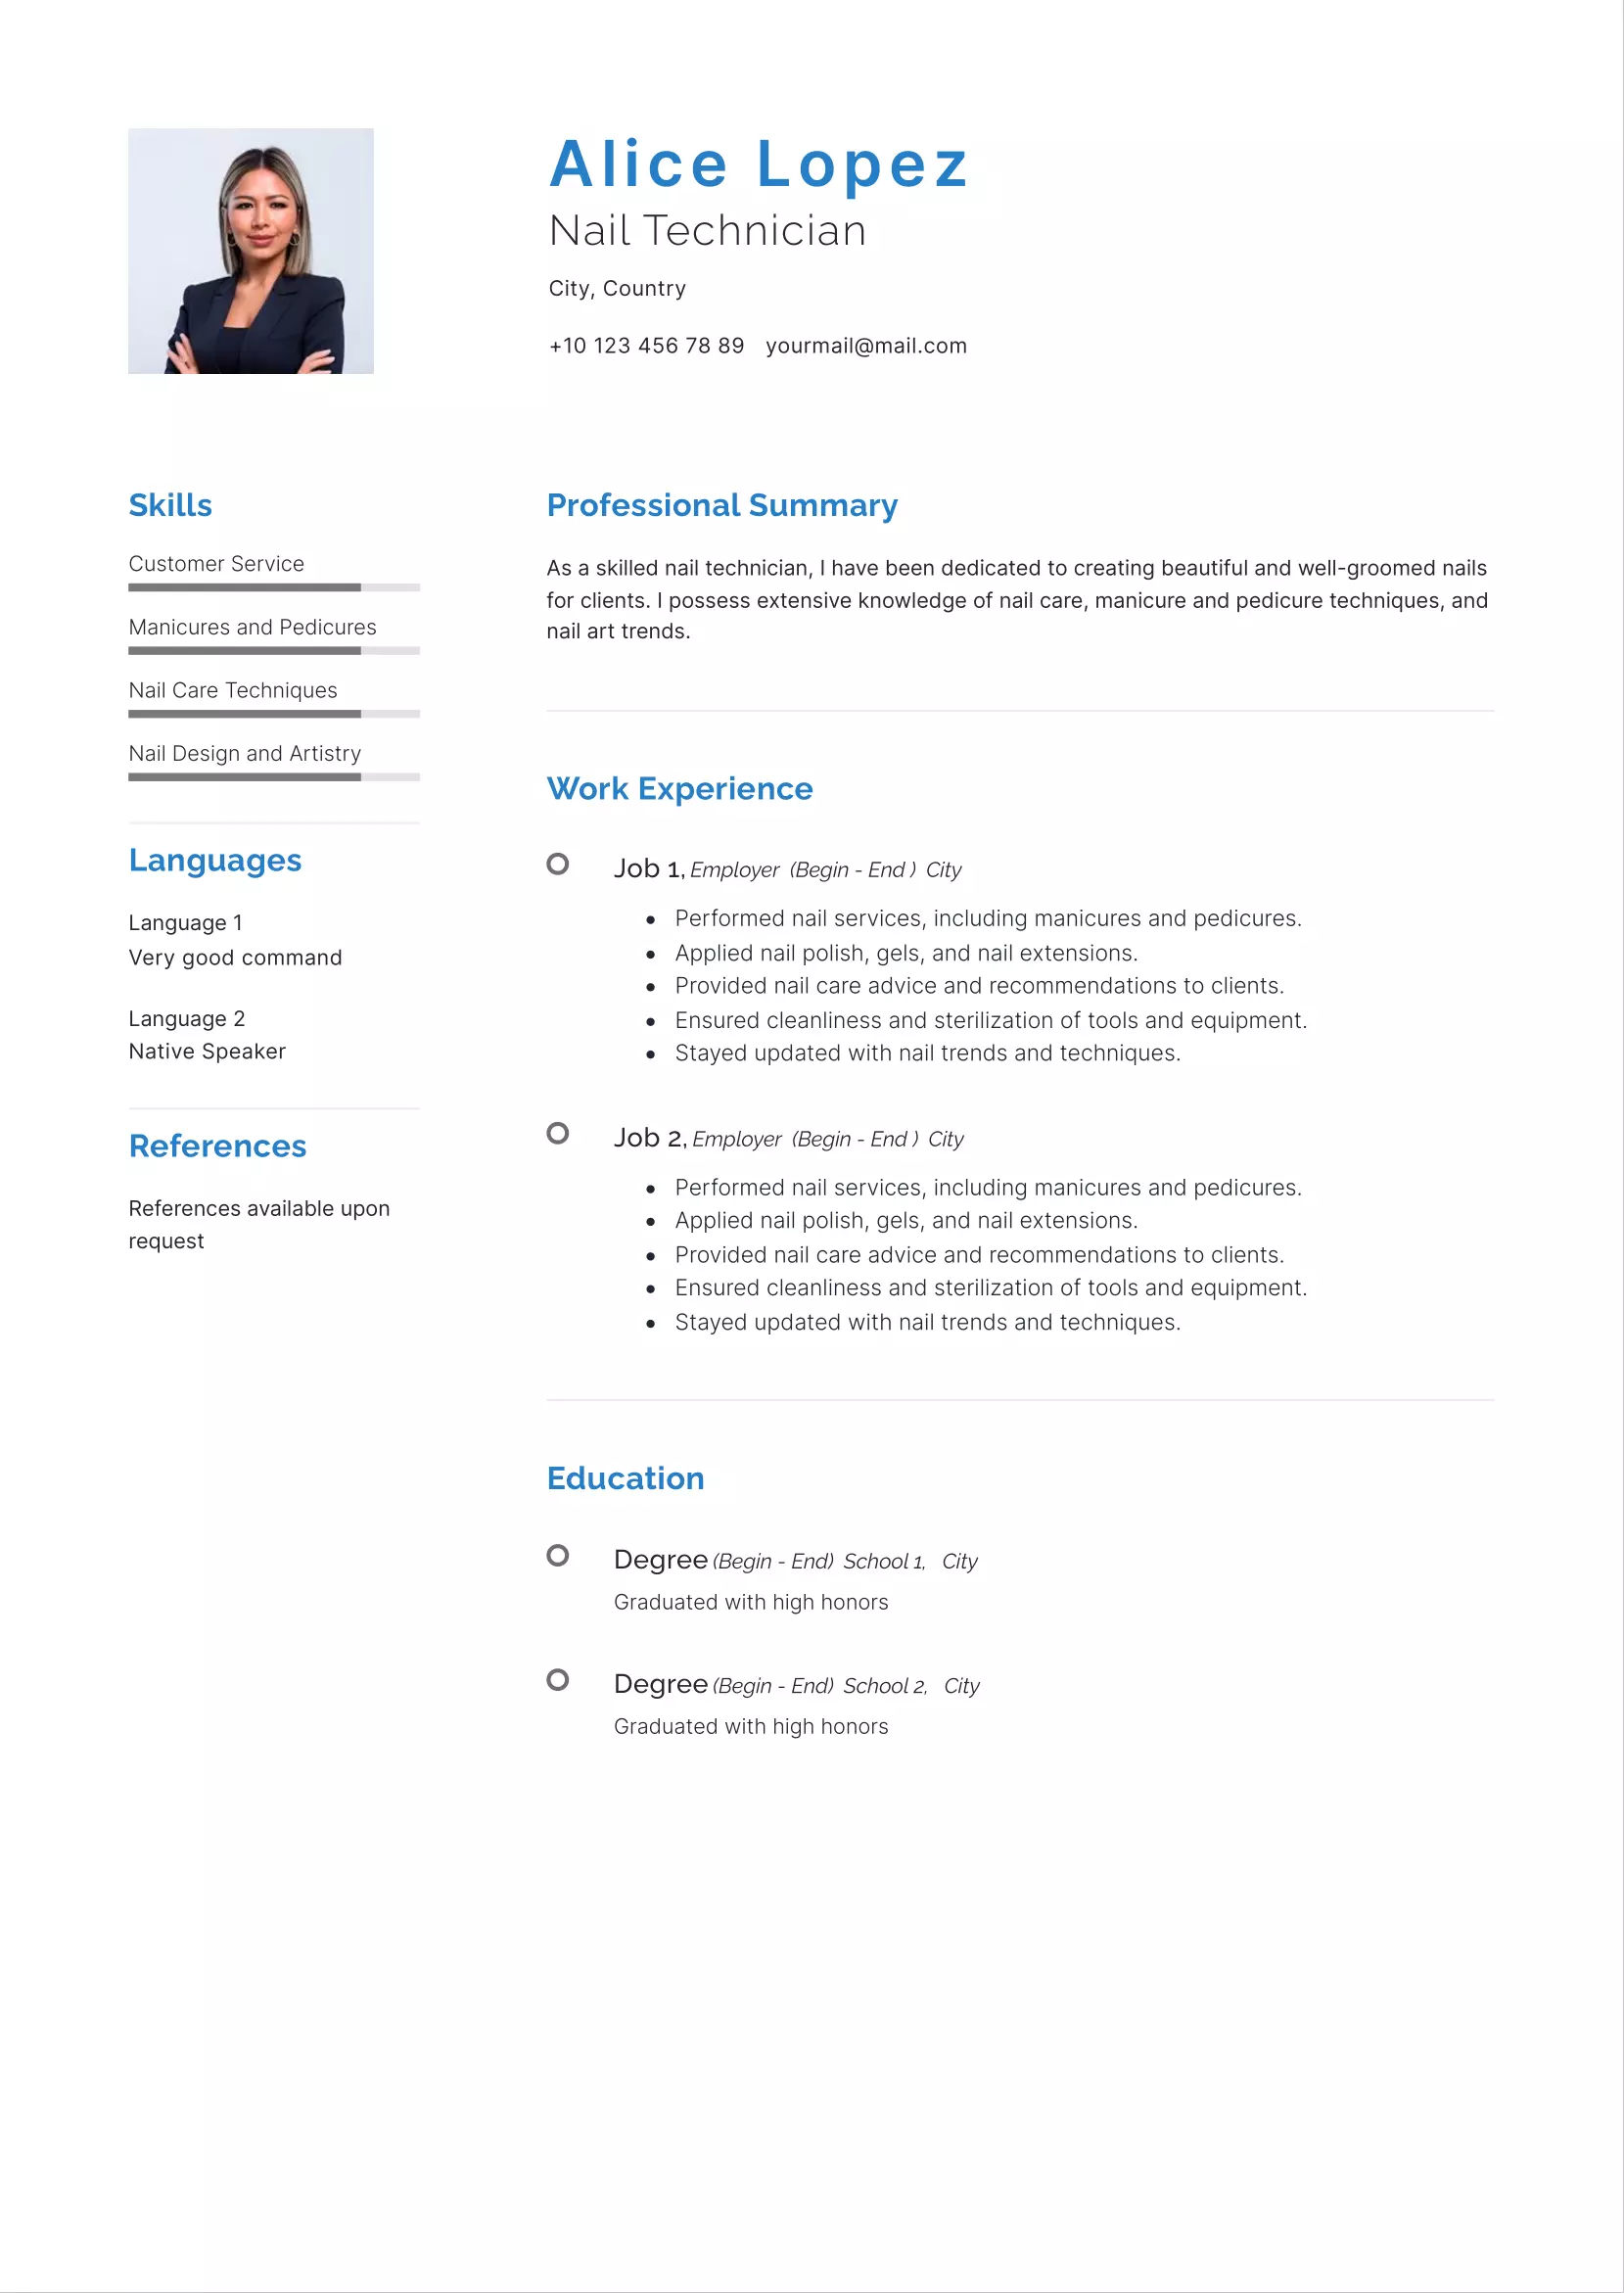 Nail technician resume example